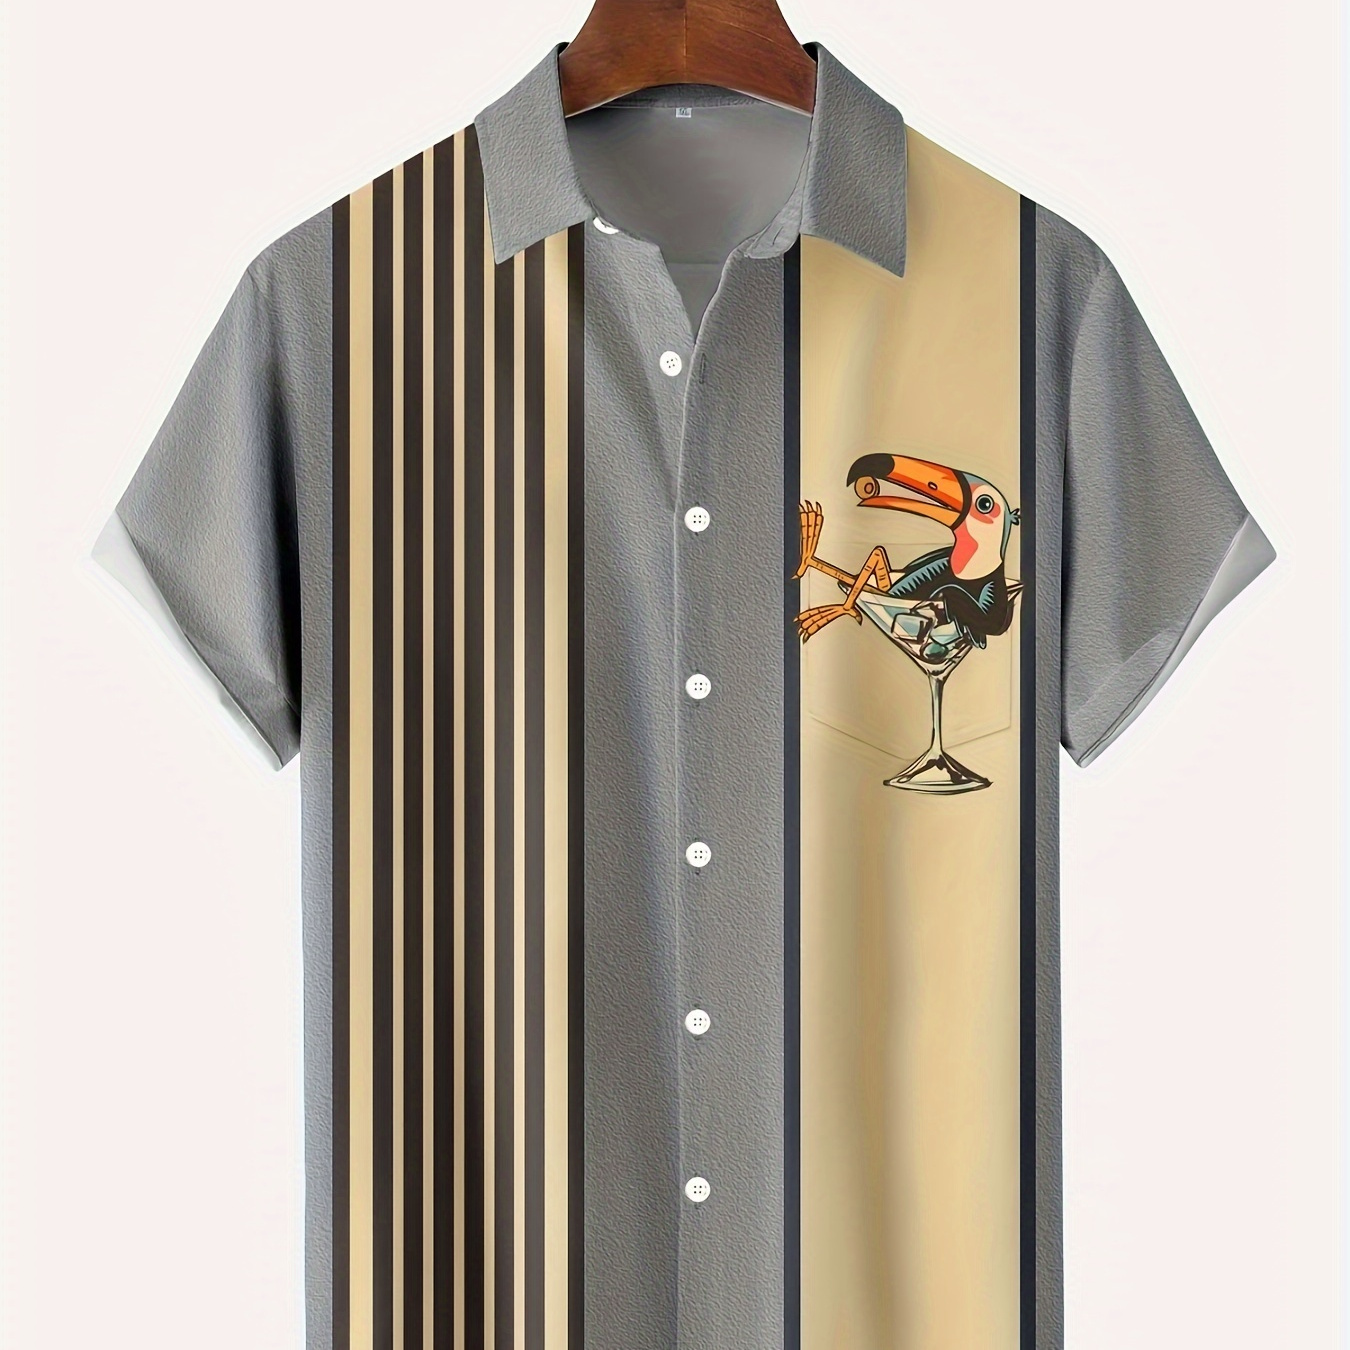 

Men's Parrot Print Striped Shirt, Casual Lapel Button Up Short Sleeve Shirt For Outdoor Activities